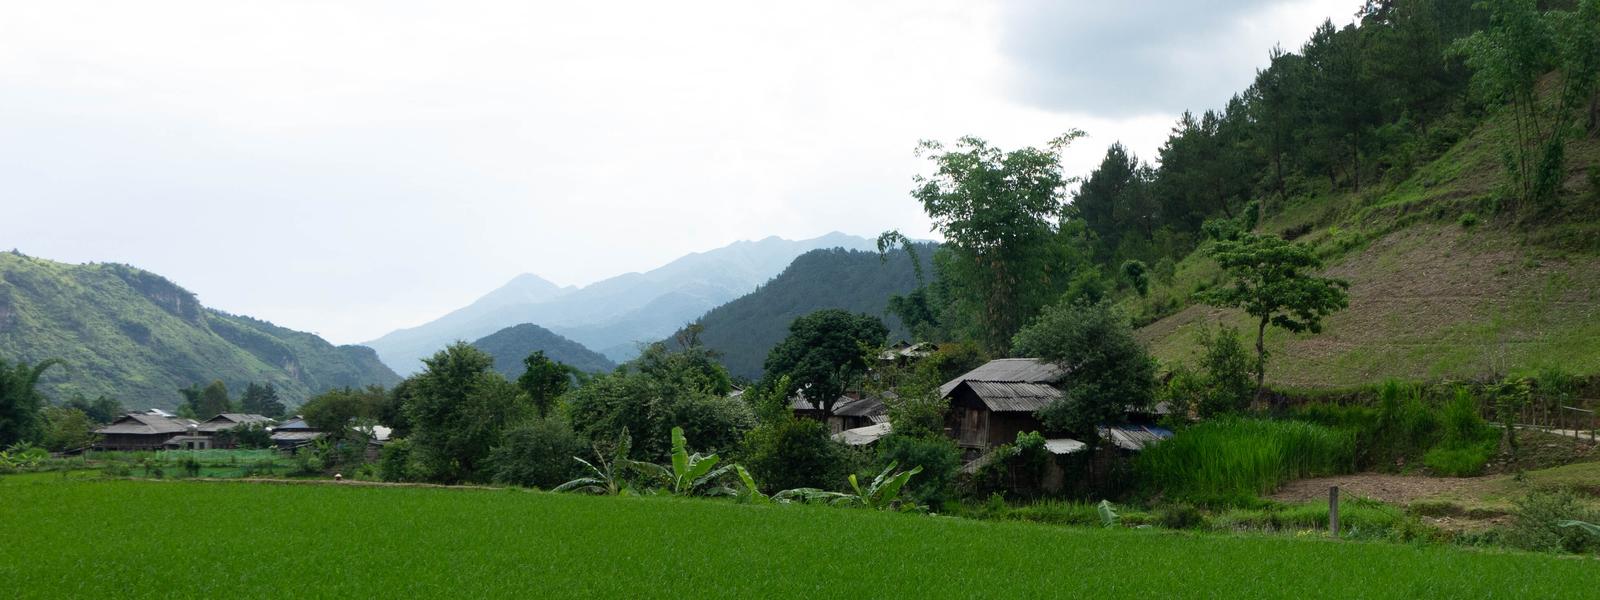 Vietnam rural scenes with mountains